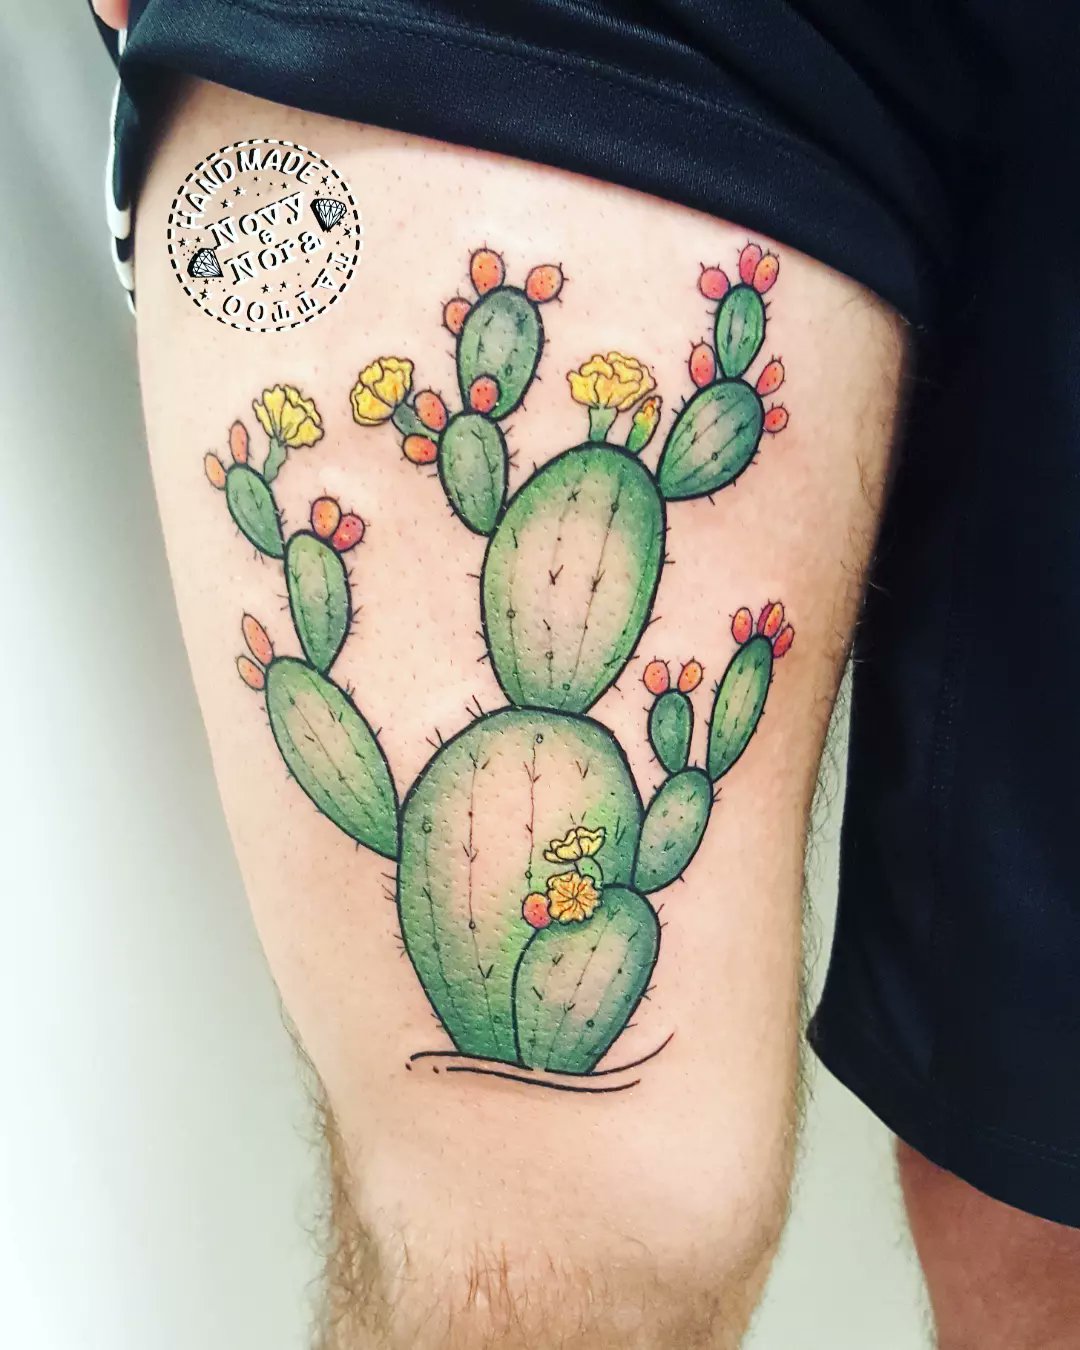 rachainsworth auf Twitter Prickly pear cactus  Thank you so much  Patricia       rachainsworth tattooartist tattoo armtattoo  botanicaltattoo cactustattoo pricklypear cactus blacktattoo  finelinetattoo linetattoo lines 